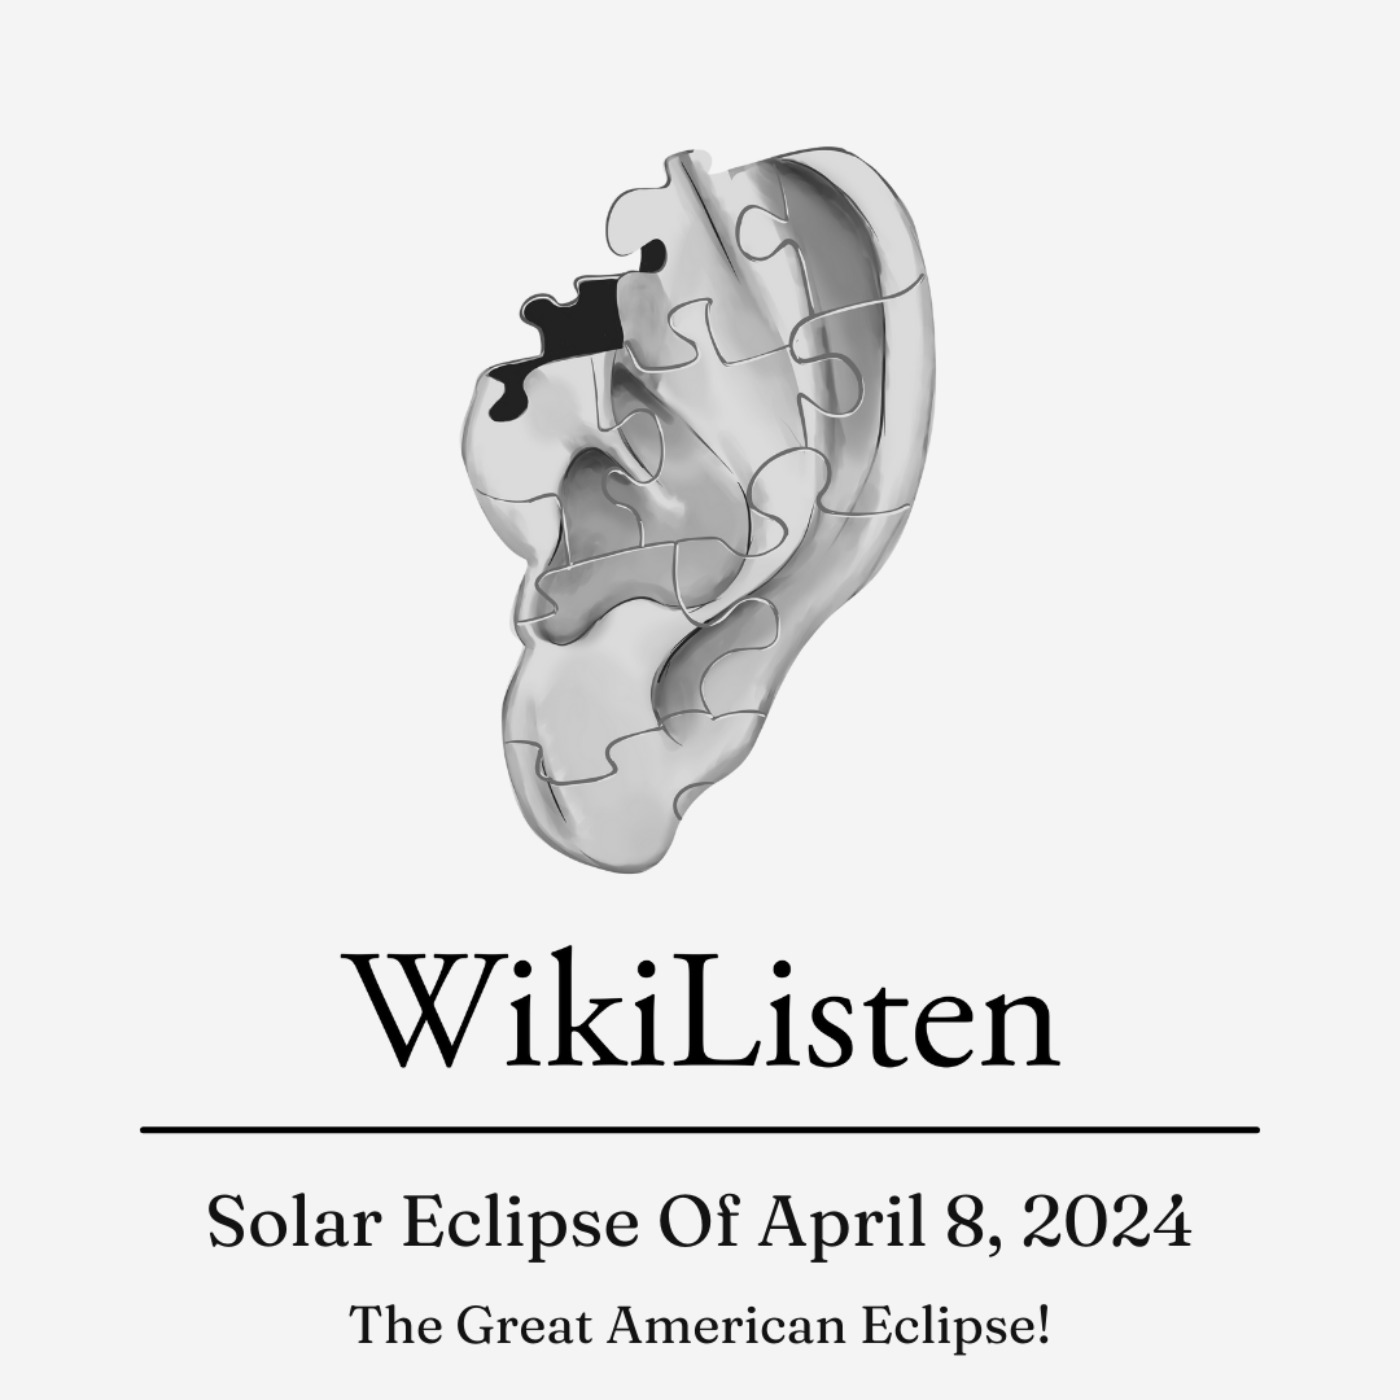 Solar Eclipse Of April 8, 2024